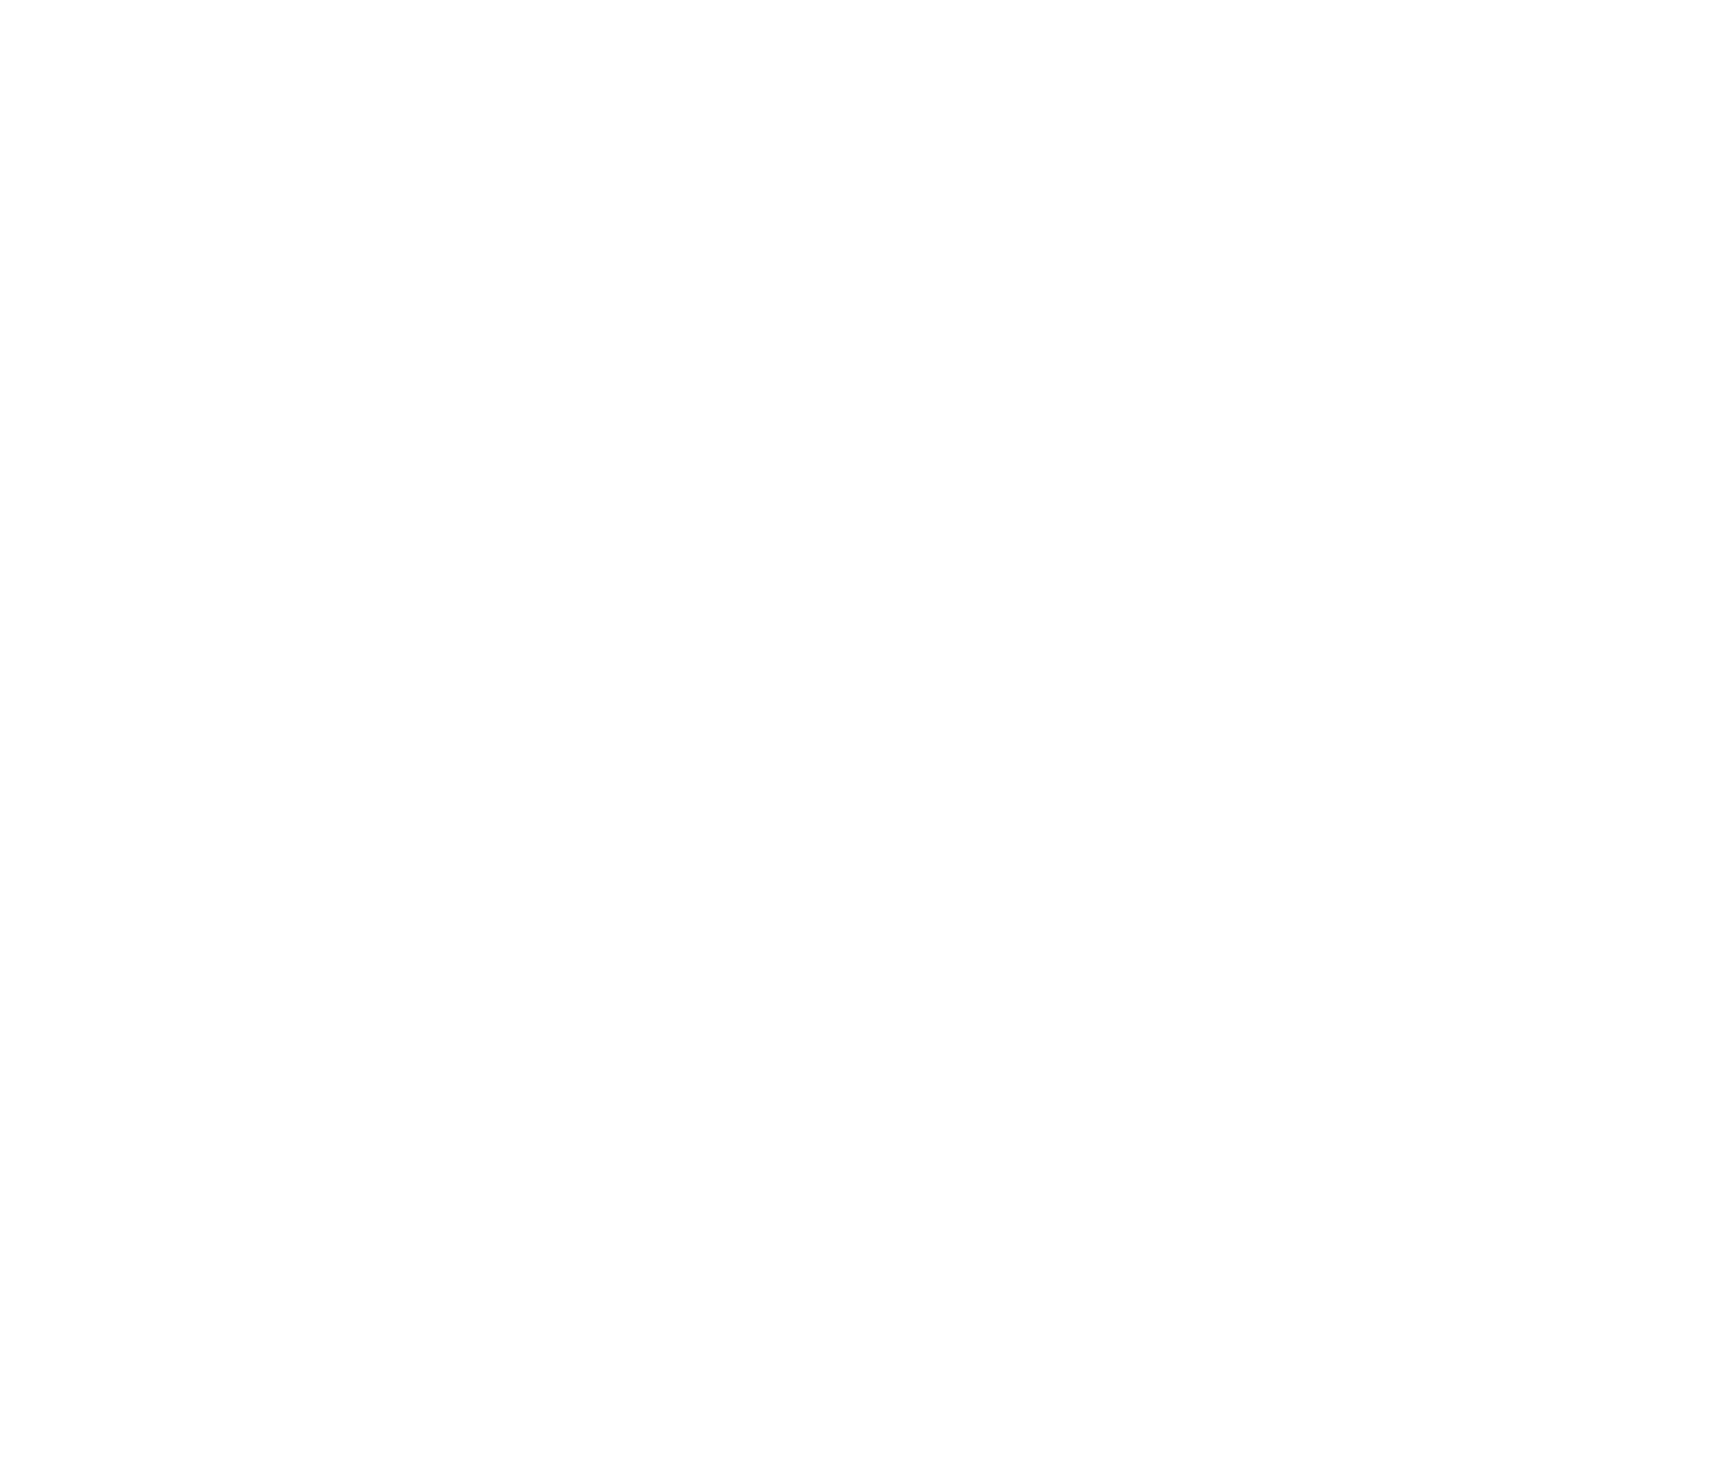 Traverse City Bike Shop and Service City Bike Shop